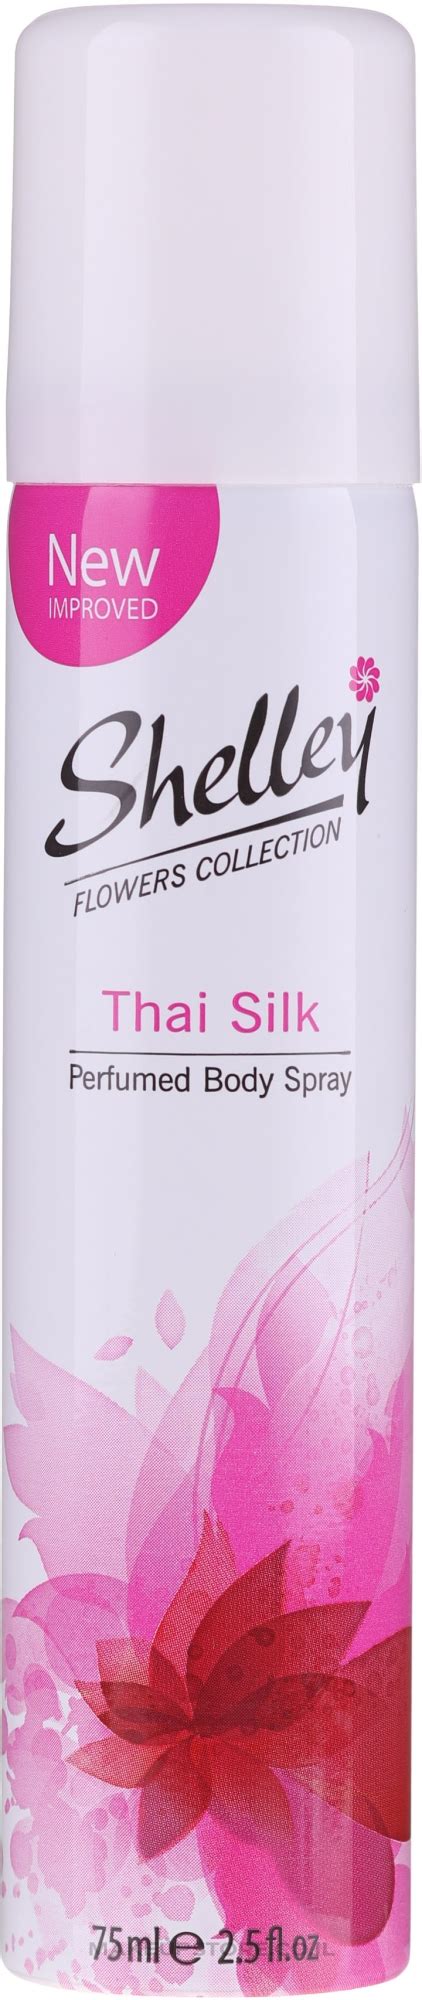 Il Shelley Body Spray Thai Silk דאודורנט ספריי משי תאילנדי